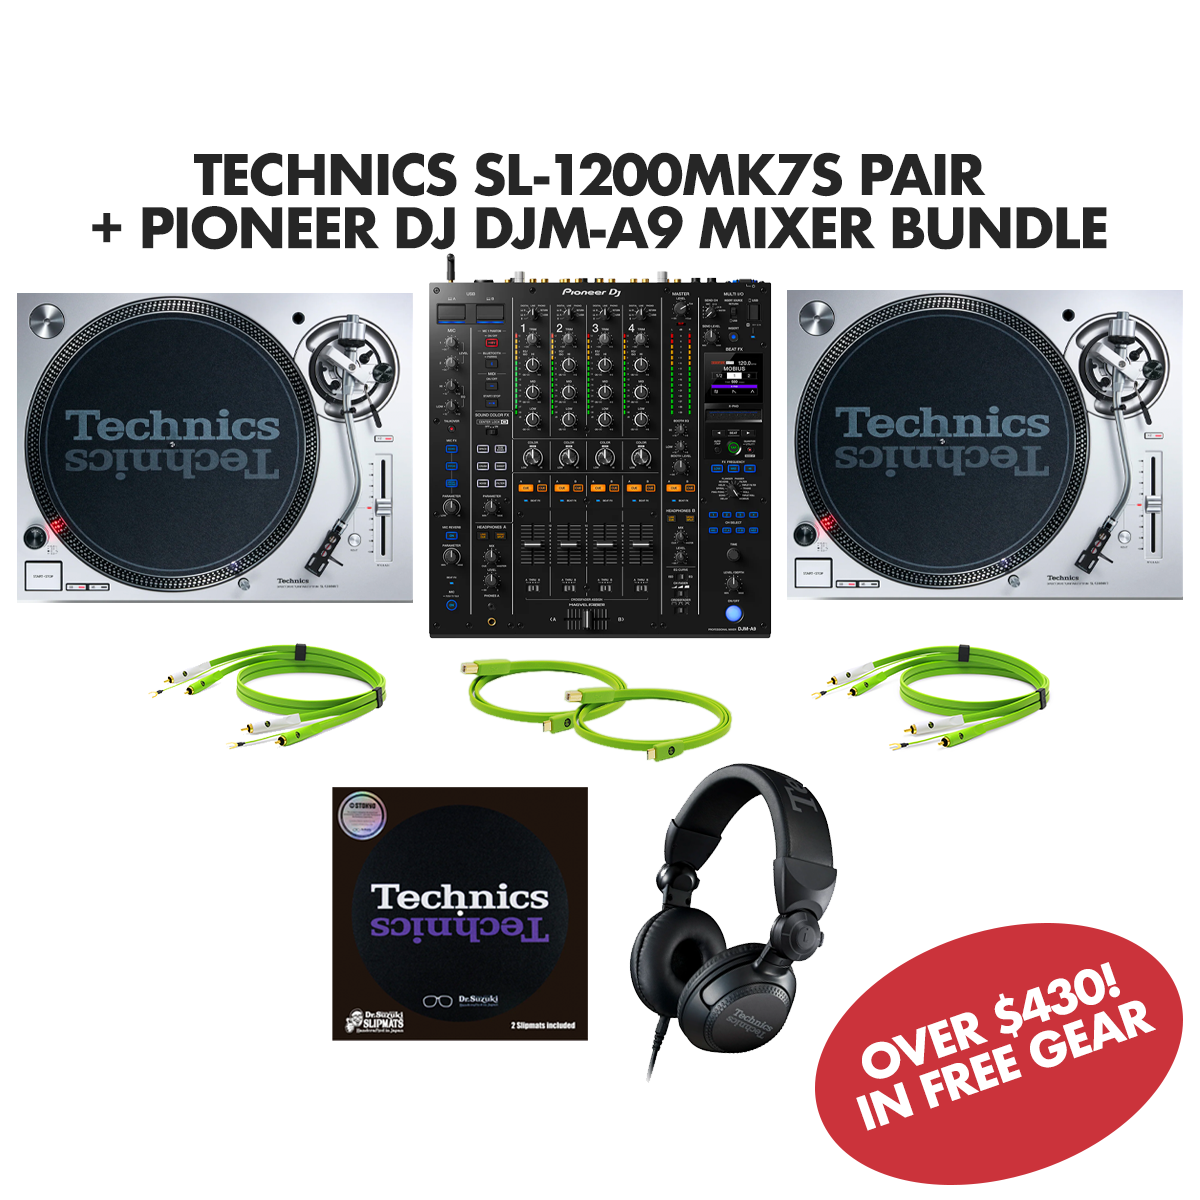 Technics SL-1200MK7S (Silver) + Pioneer DJ DJM-A9 Bundle with FREE Technics Headphones Cables + Slipmats